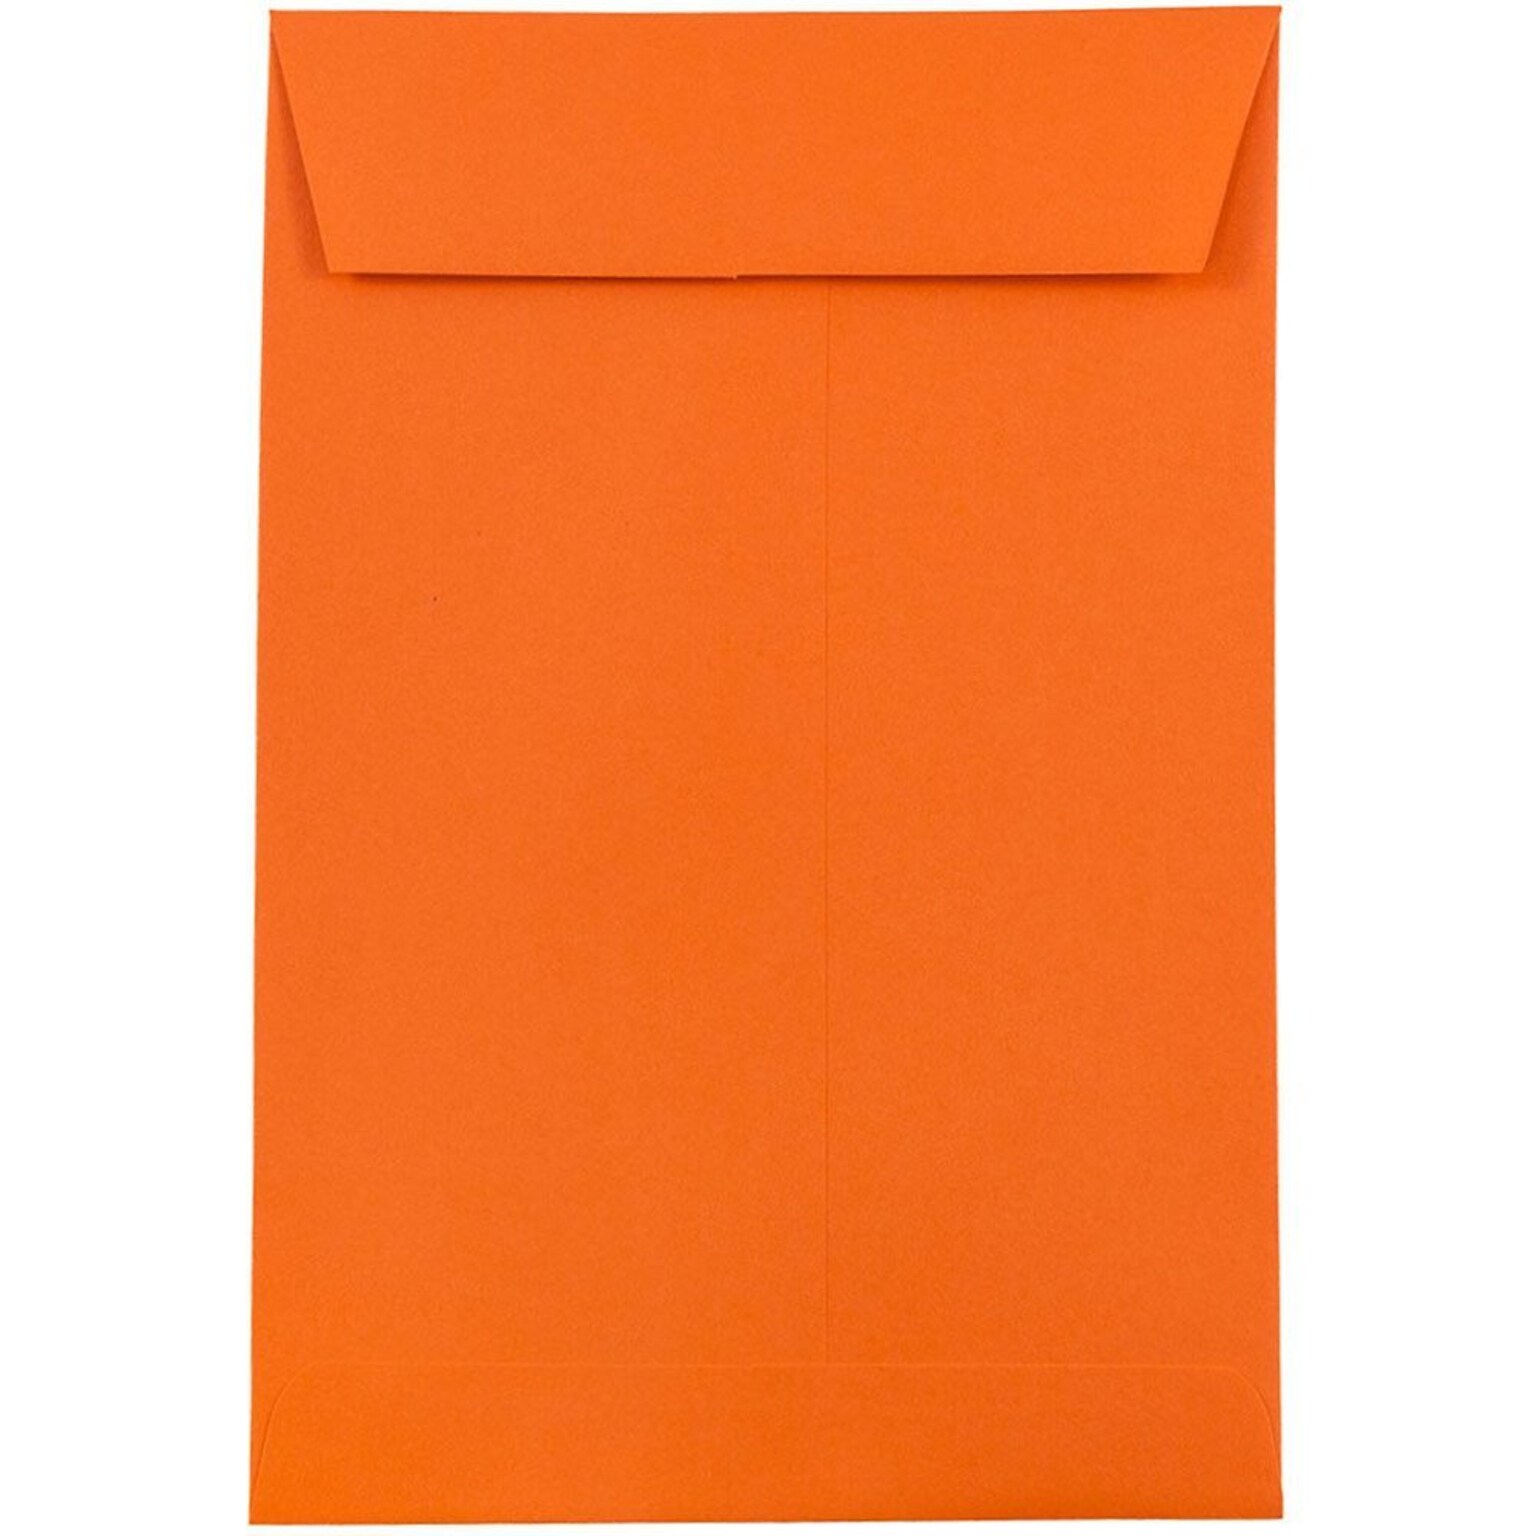 JAM Paper 6 x 9 Open End Catalog Colored Envelopes, Orange Recycled, 50/Pack (88129i)